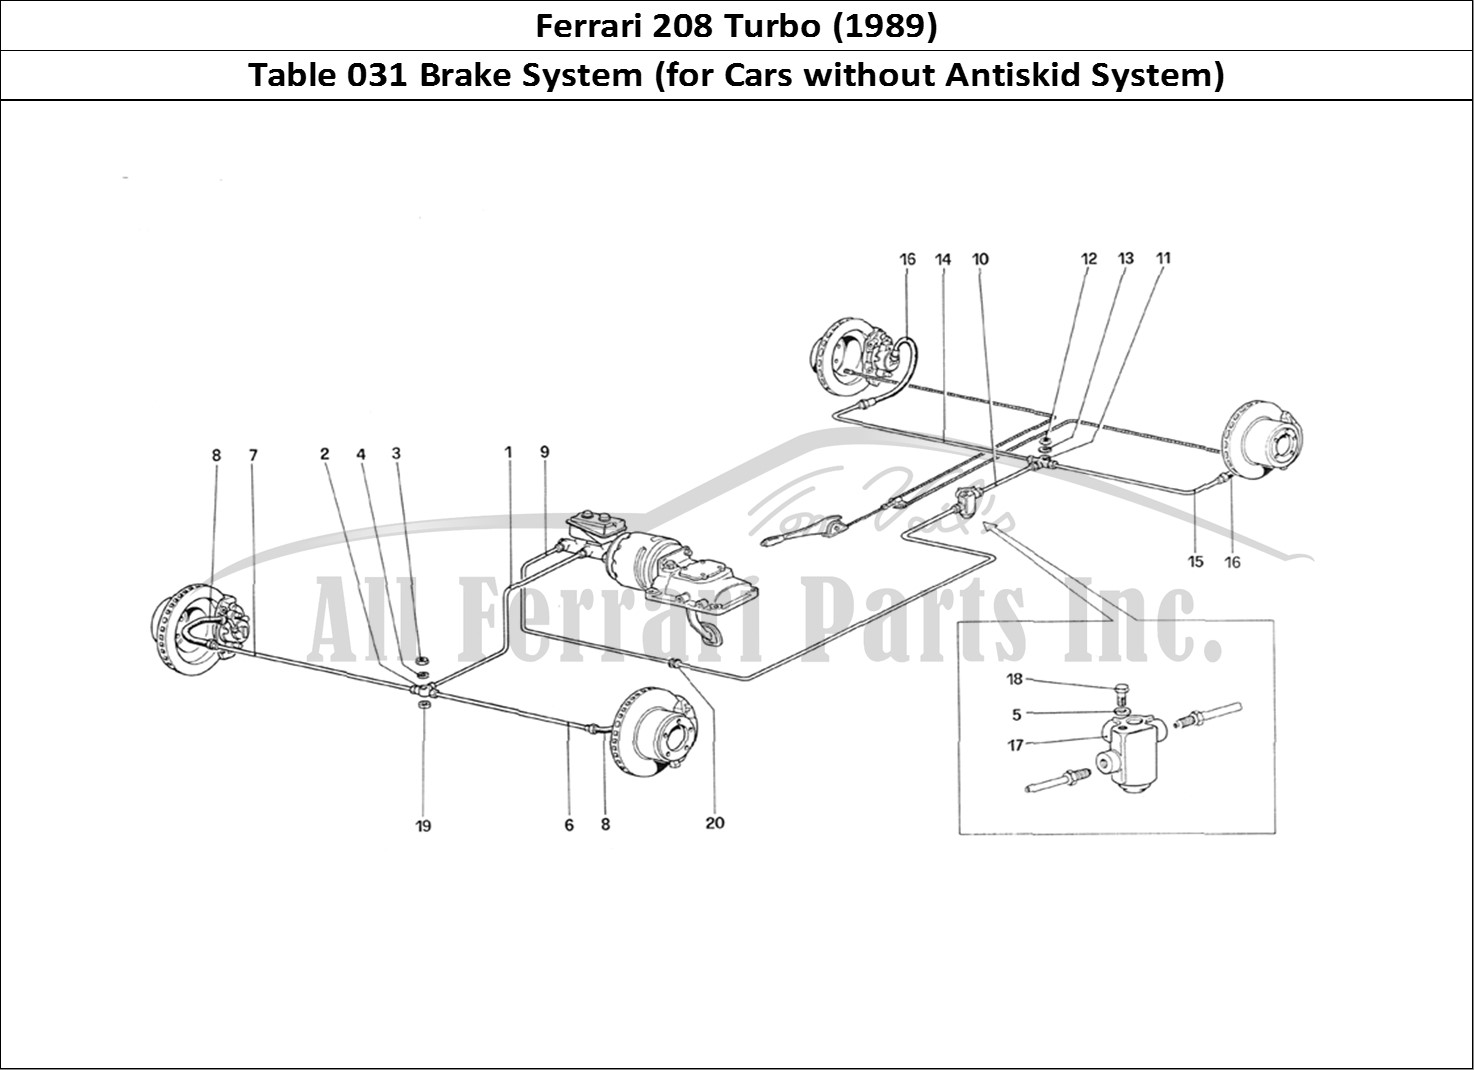 Ferrari Parts Ferrari 208 Turbo (1989) Page 031 Brake System (for Car Wit